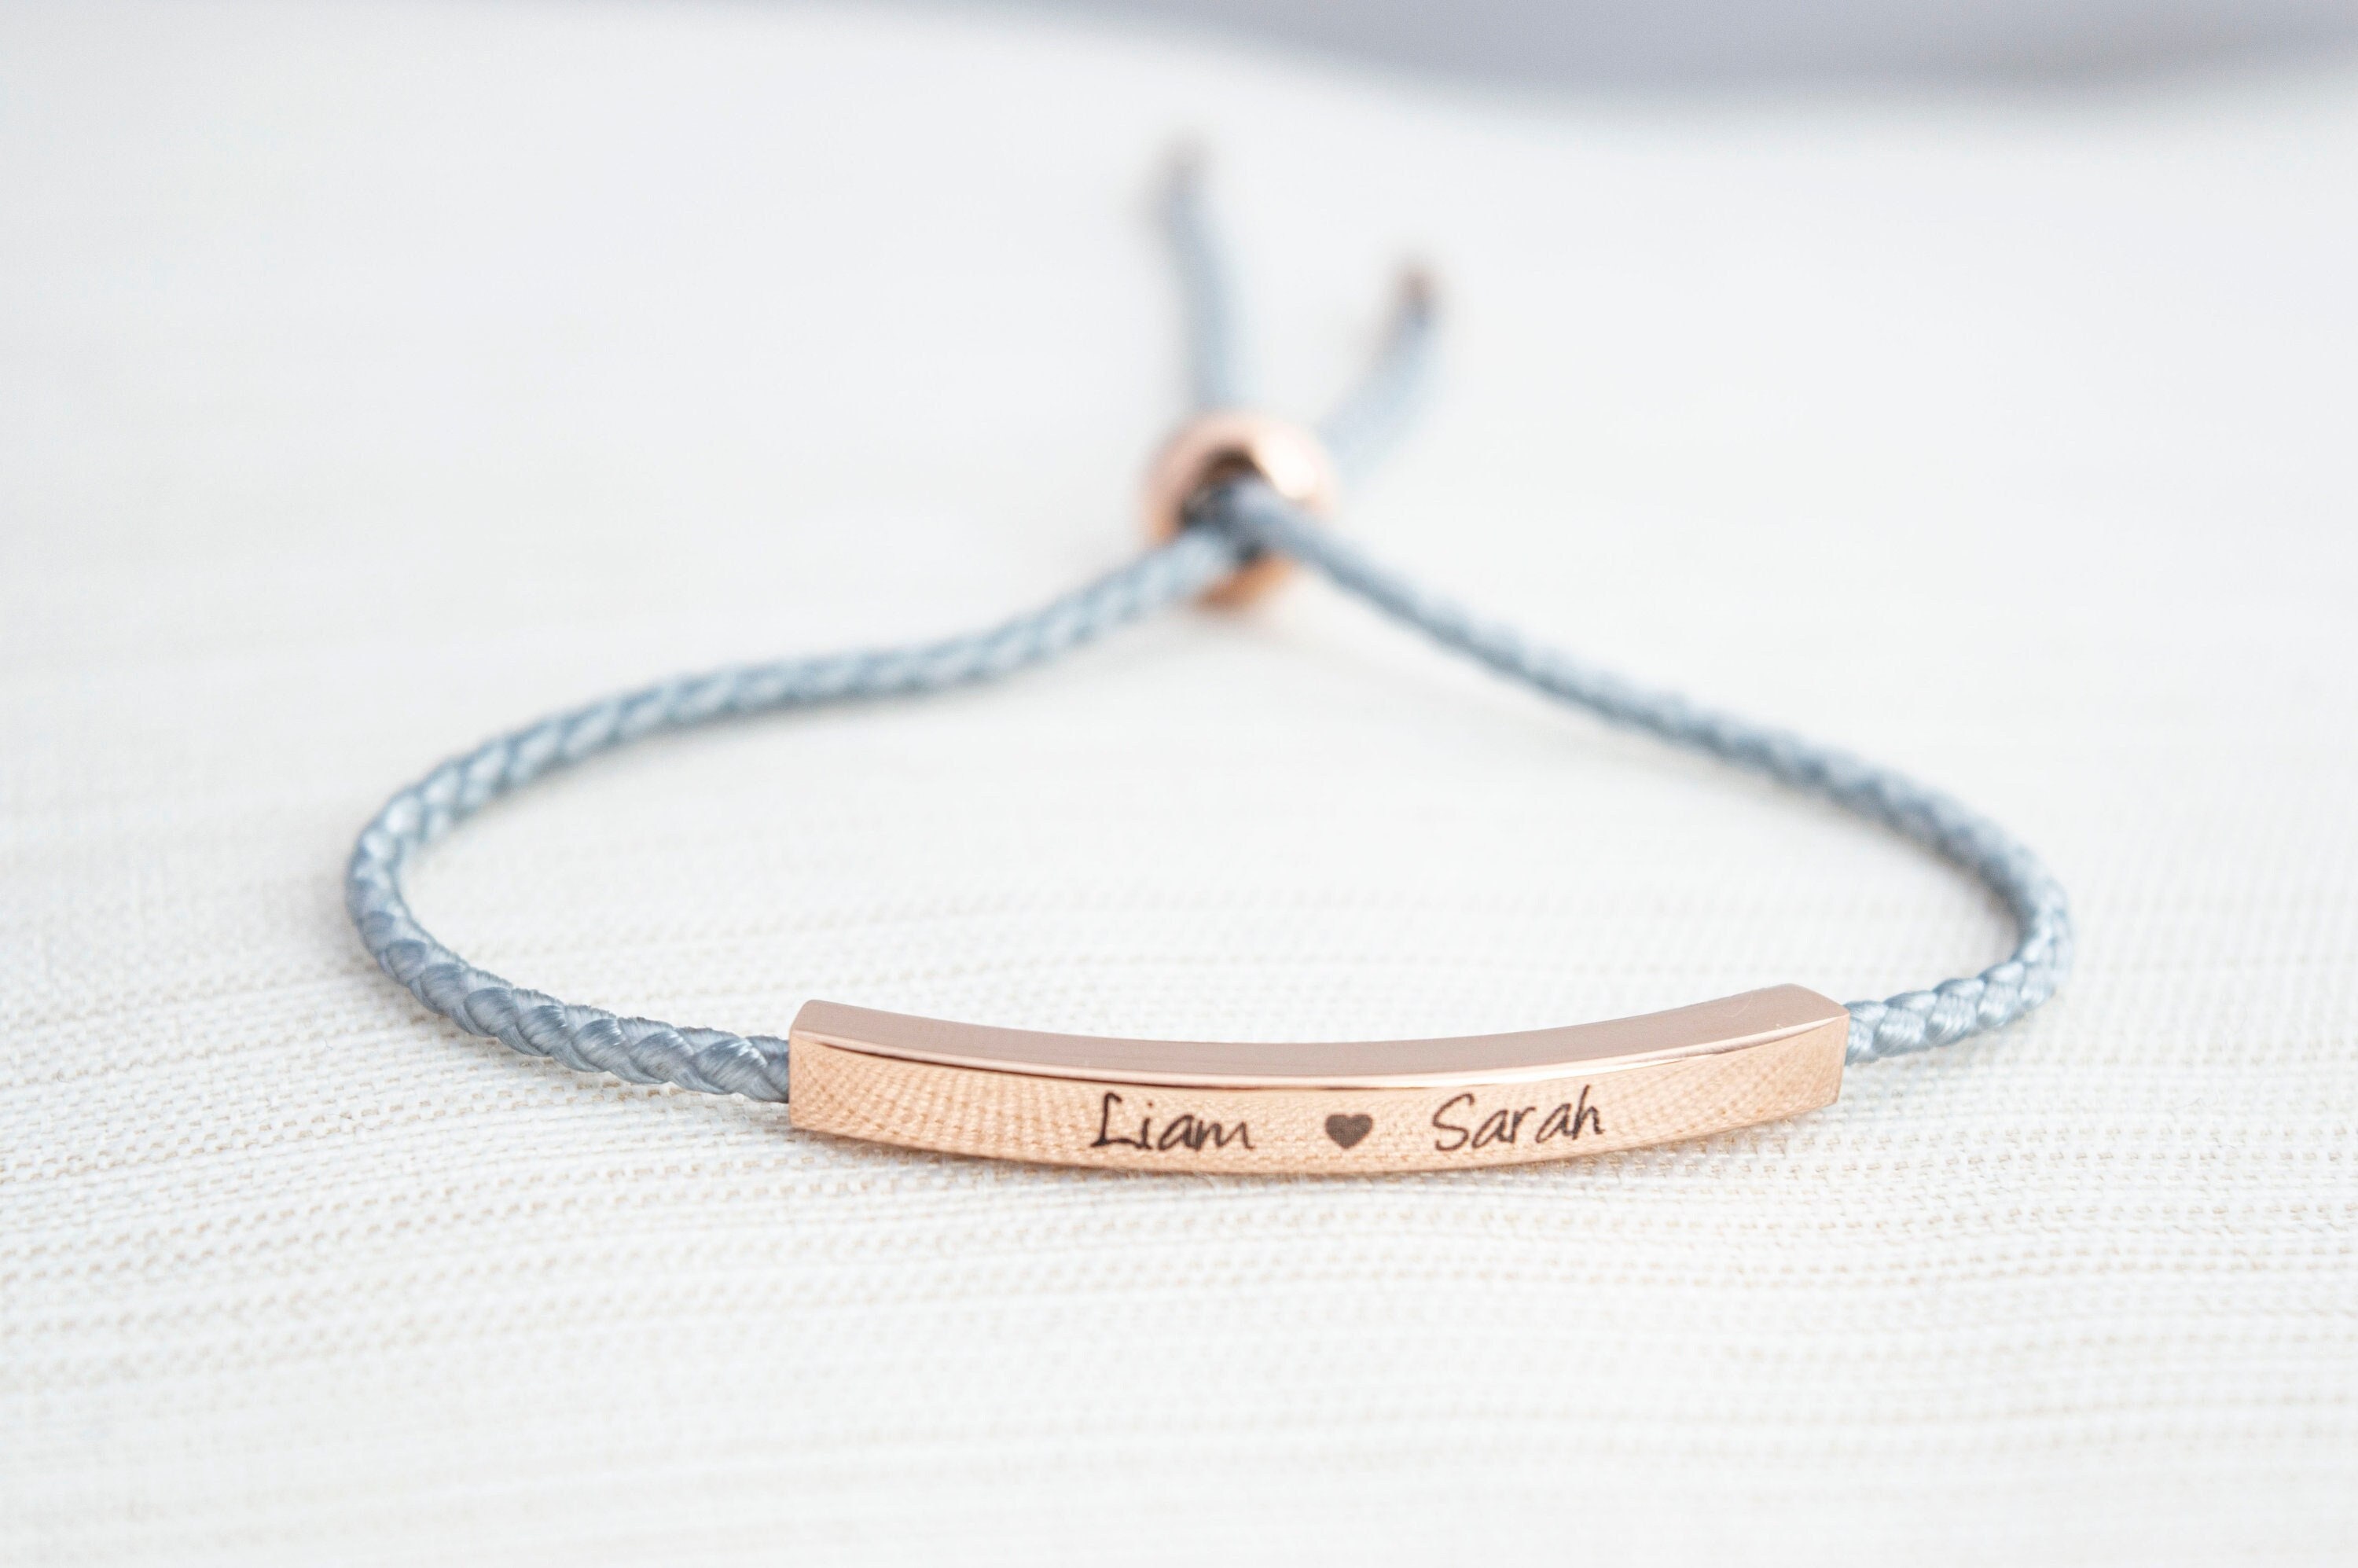 M MOOHAM Initial Charm Bracelets for Women Gifts - Engraved 26 Letters  Initial Charms Bracelet Stainless Steel Bangle Bracelet Birthday Christmas